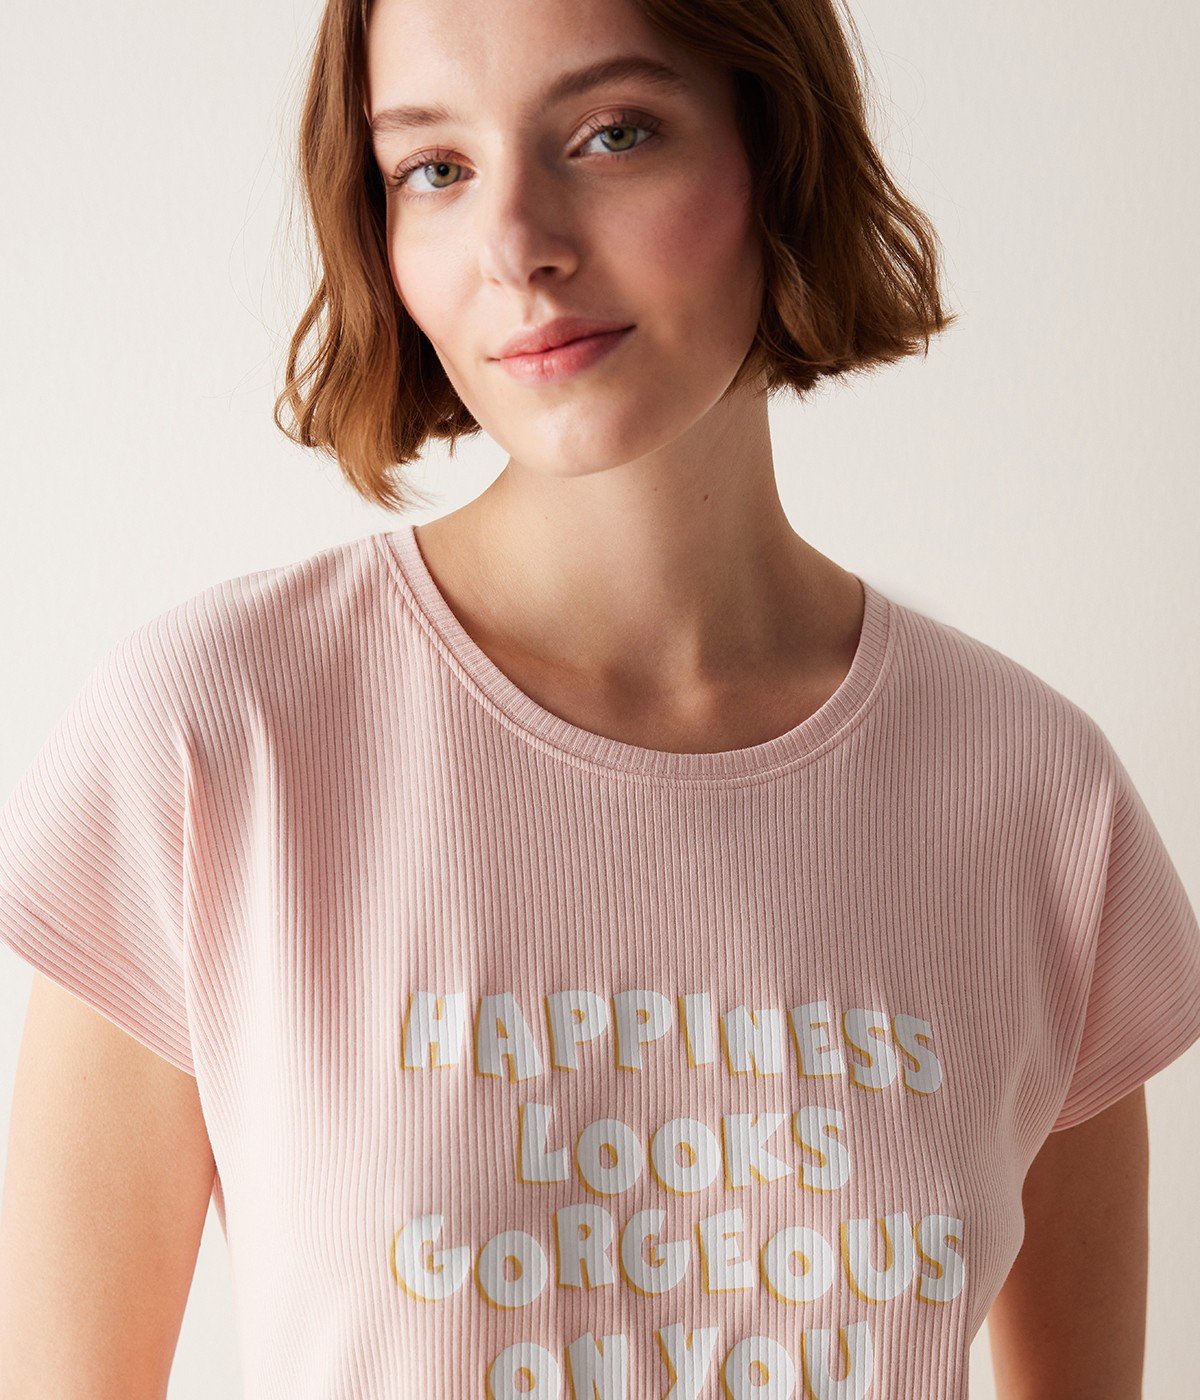 Happiness T-shirt PJ Top